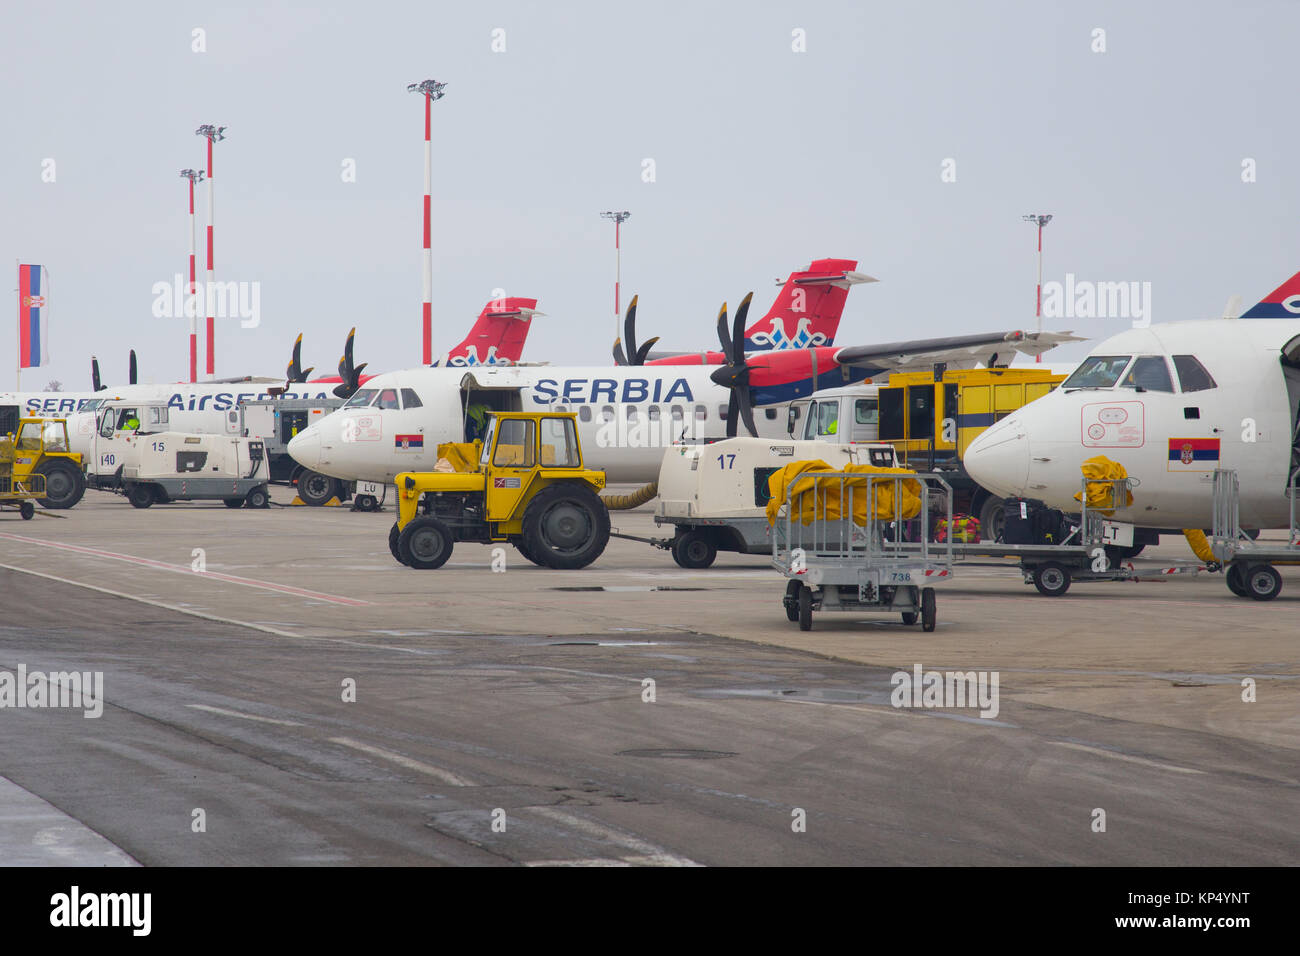 Fleet of parked aircraft of Air Serbia ATR 72 turboprop and ground handling tractors at International Nikola Tesla Airport in Belgrade, Serbia Stock Photo